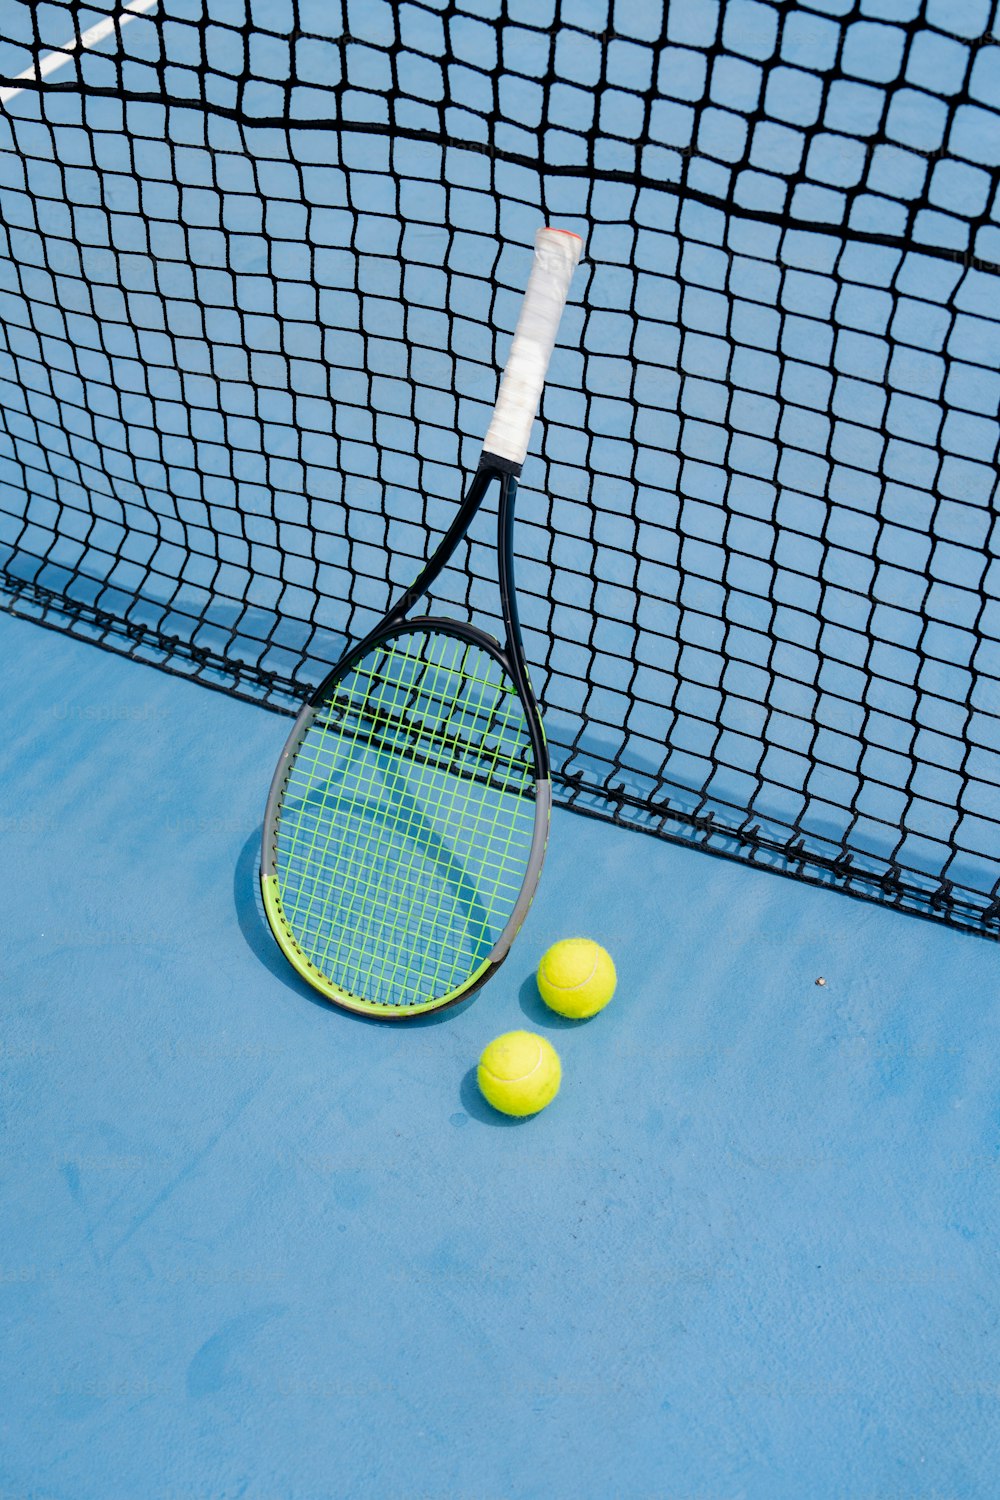 a tennis racket and three tennis balls on a tennis court